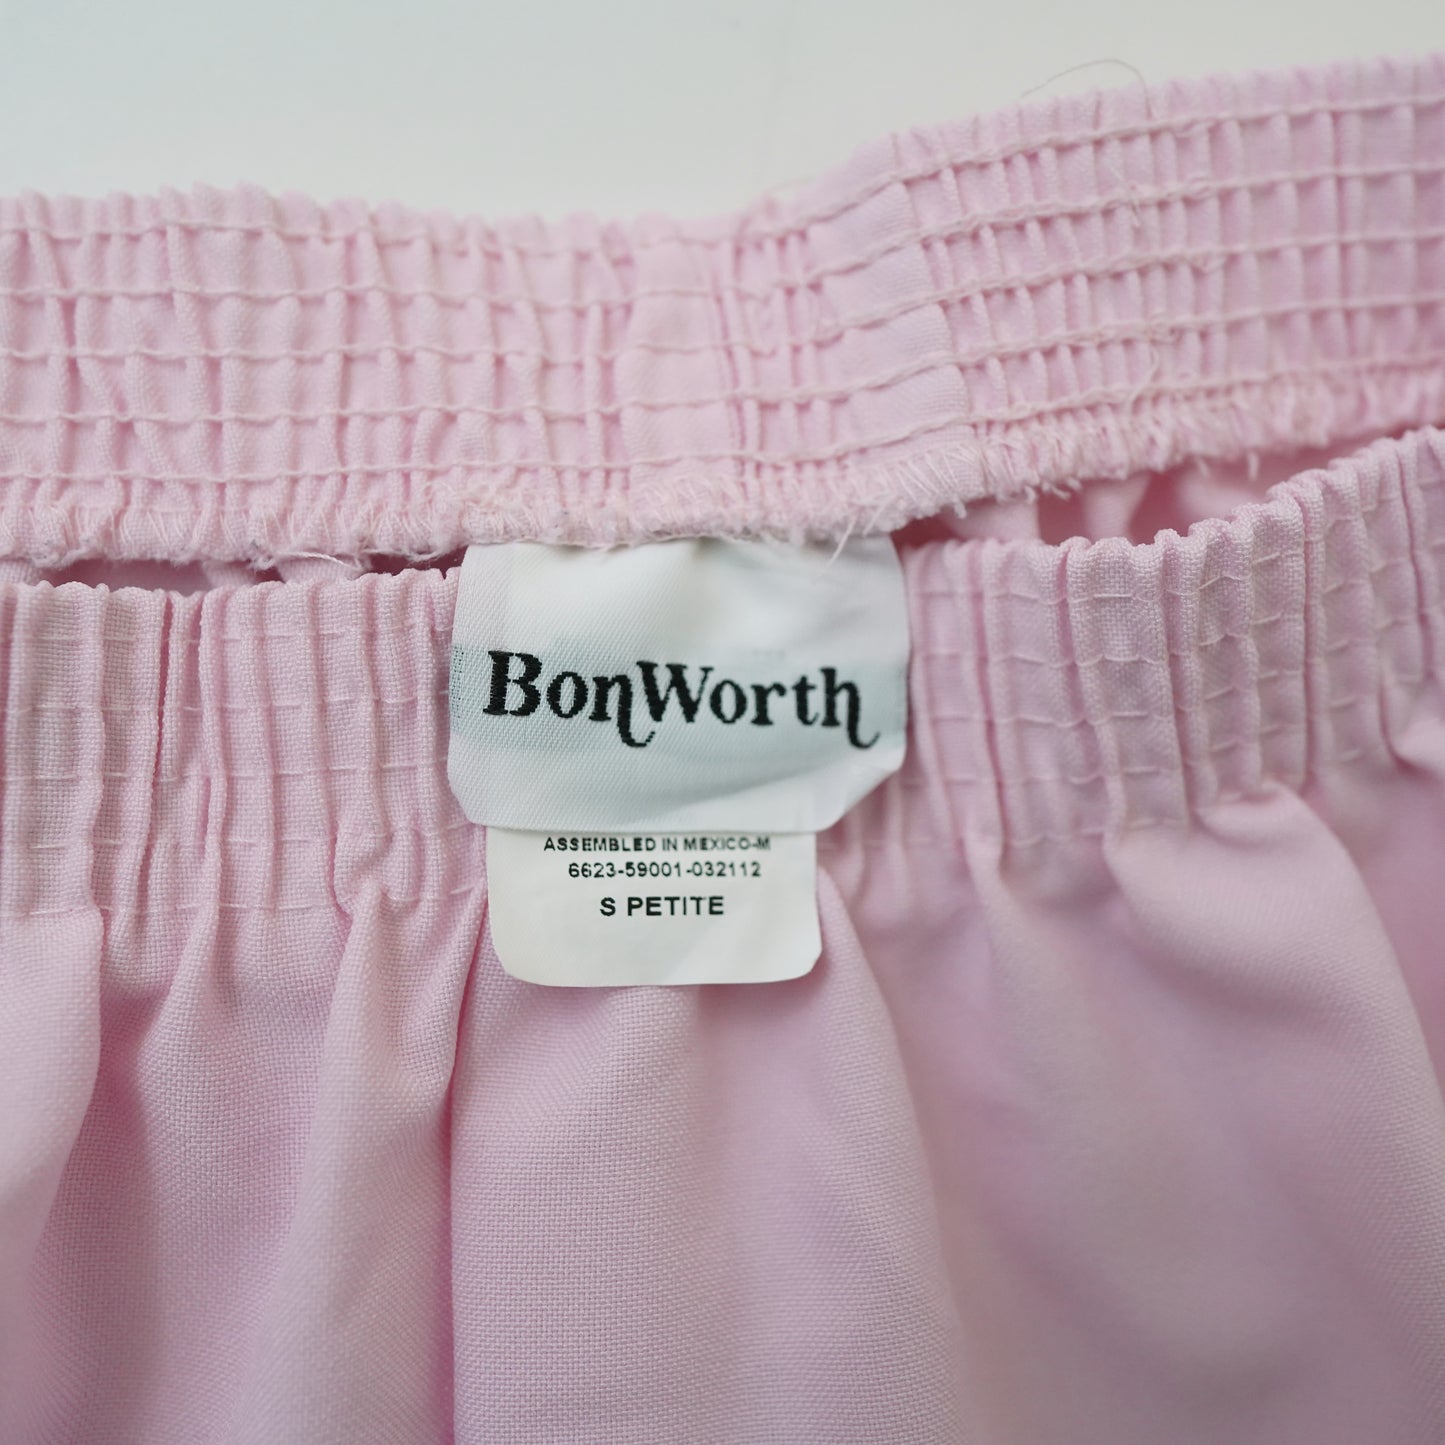 BonWorth polyester pants